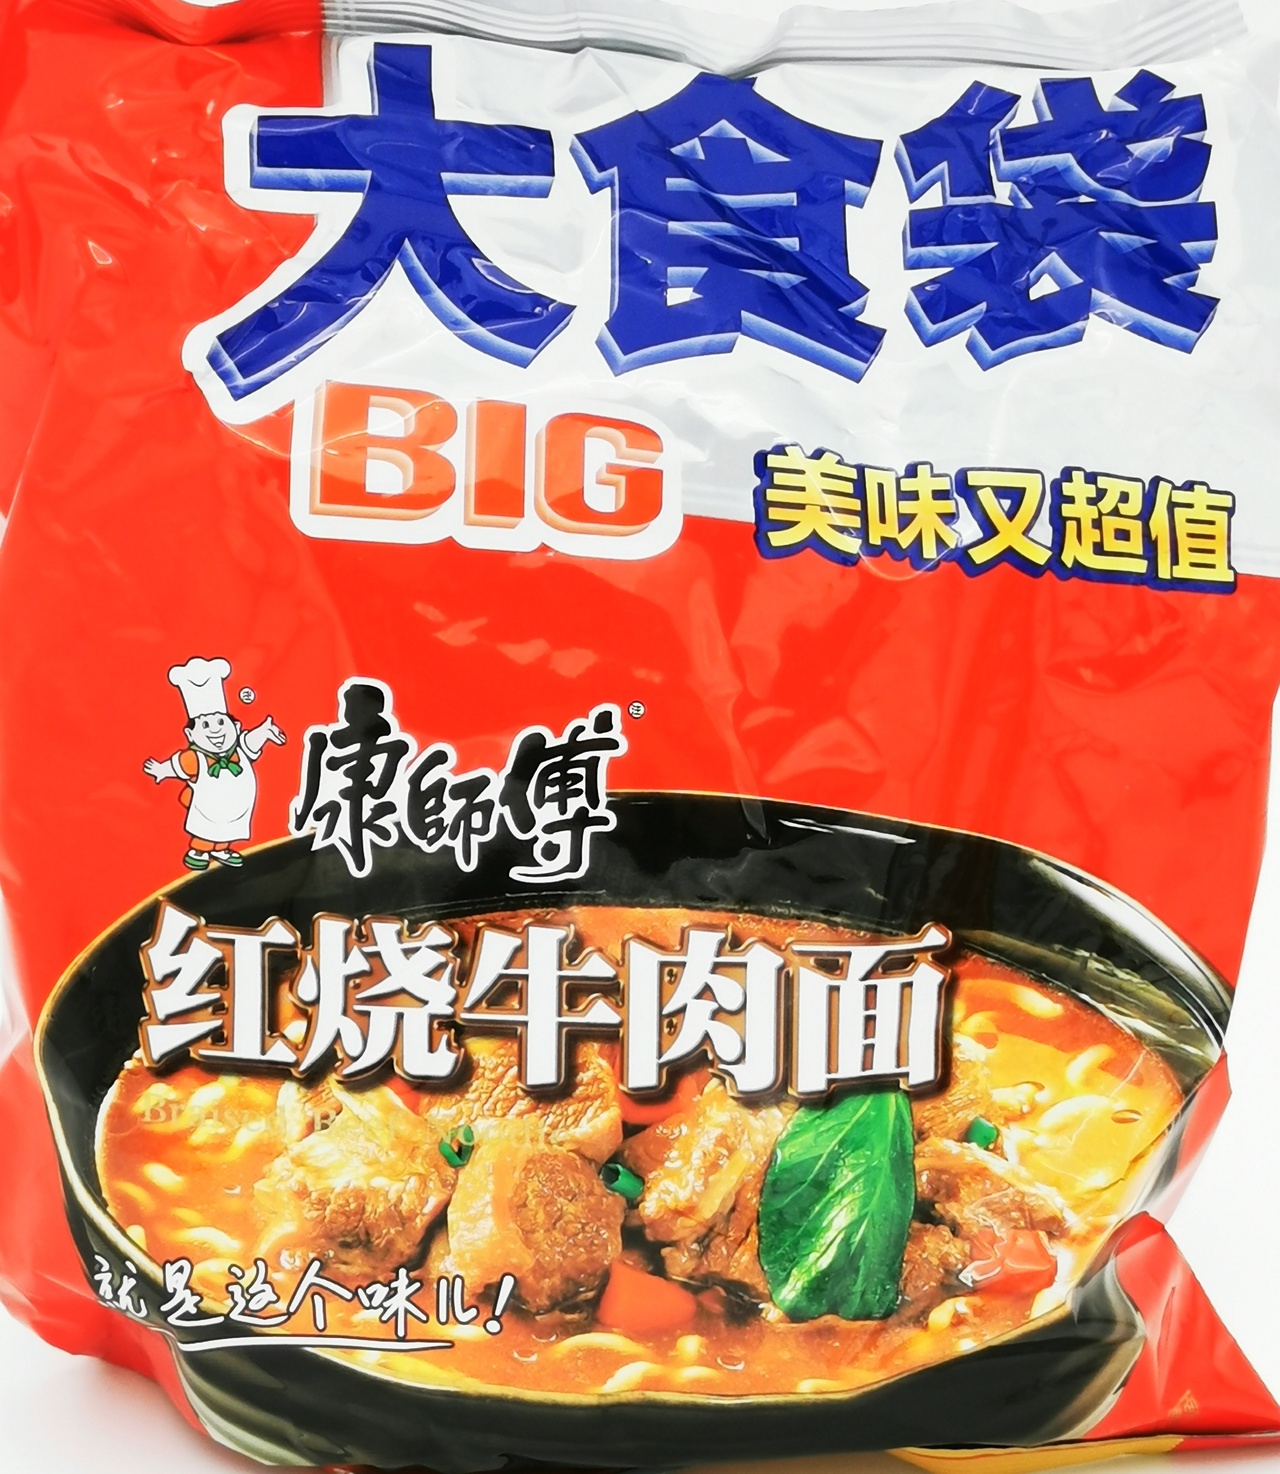 Big Braised beef noodle 145g